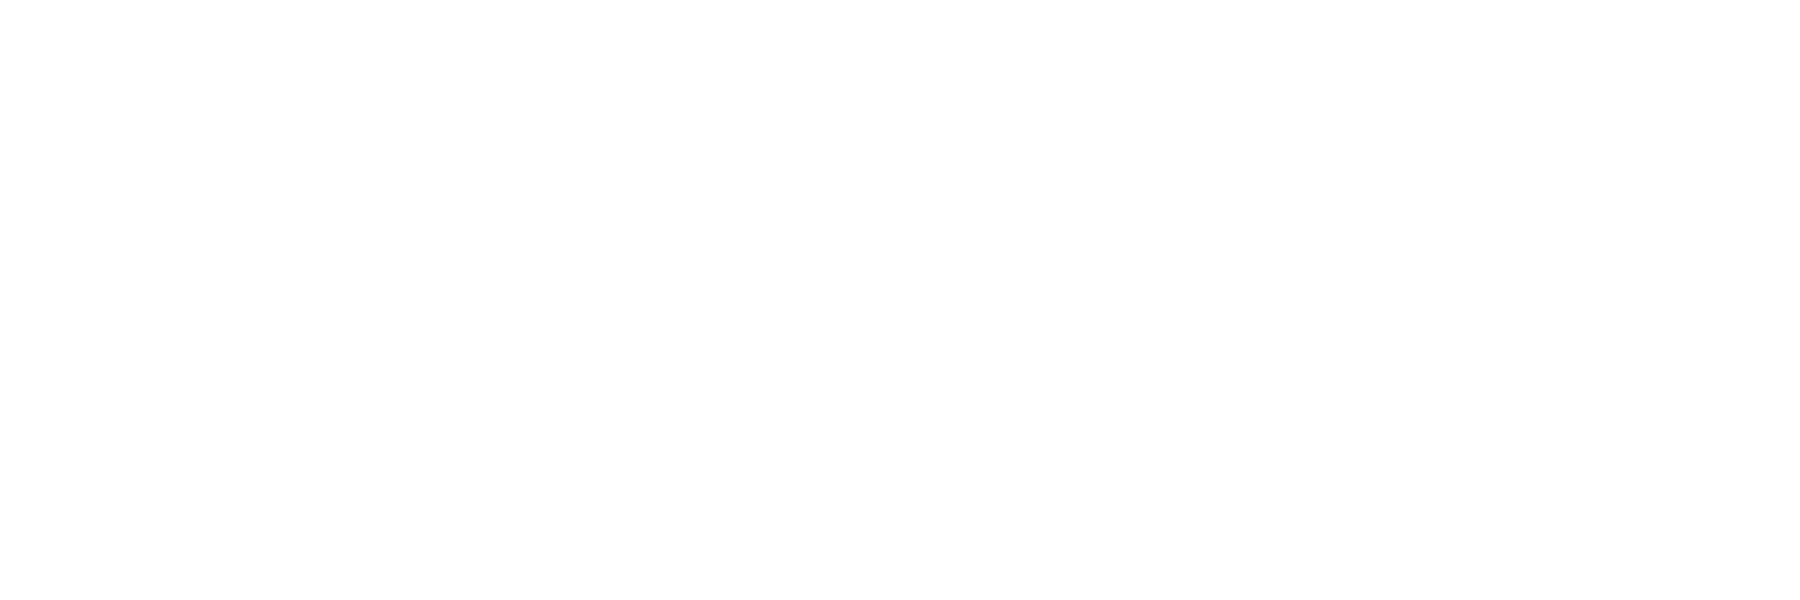 Property Network